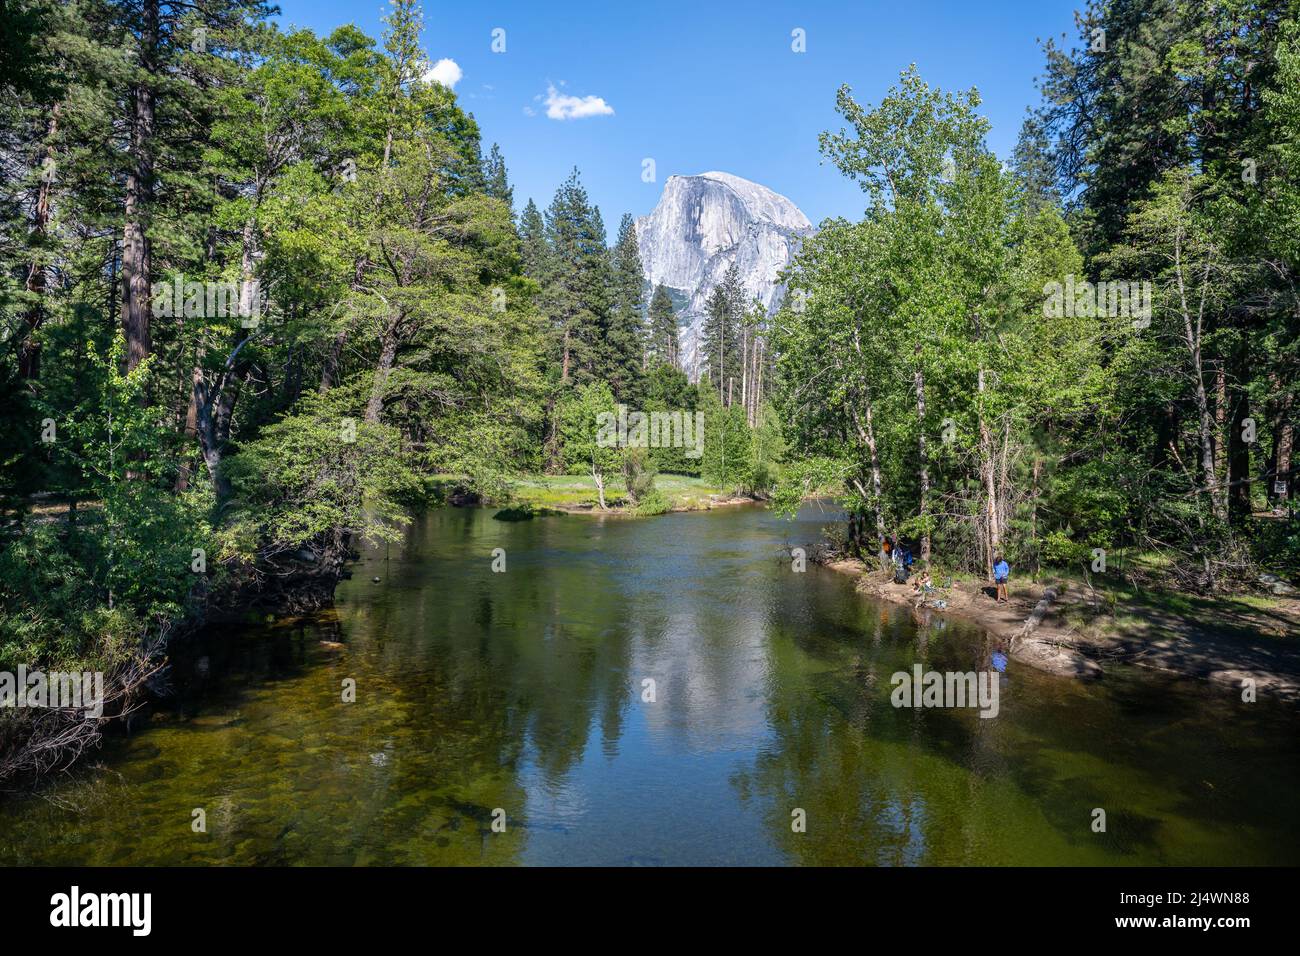 Half Dome and the Merced River from Sentinel Bridge, in Yosemite National Park, near Merced, California. Stock Photo